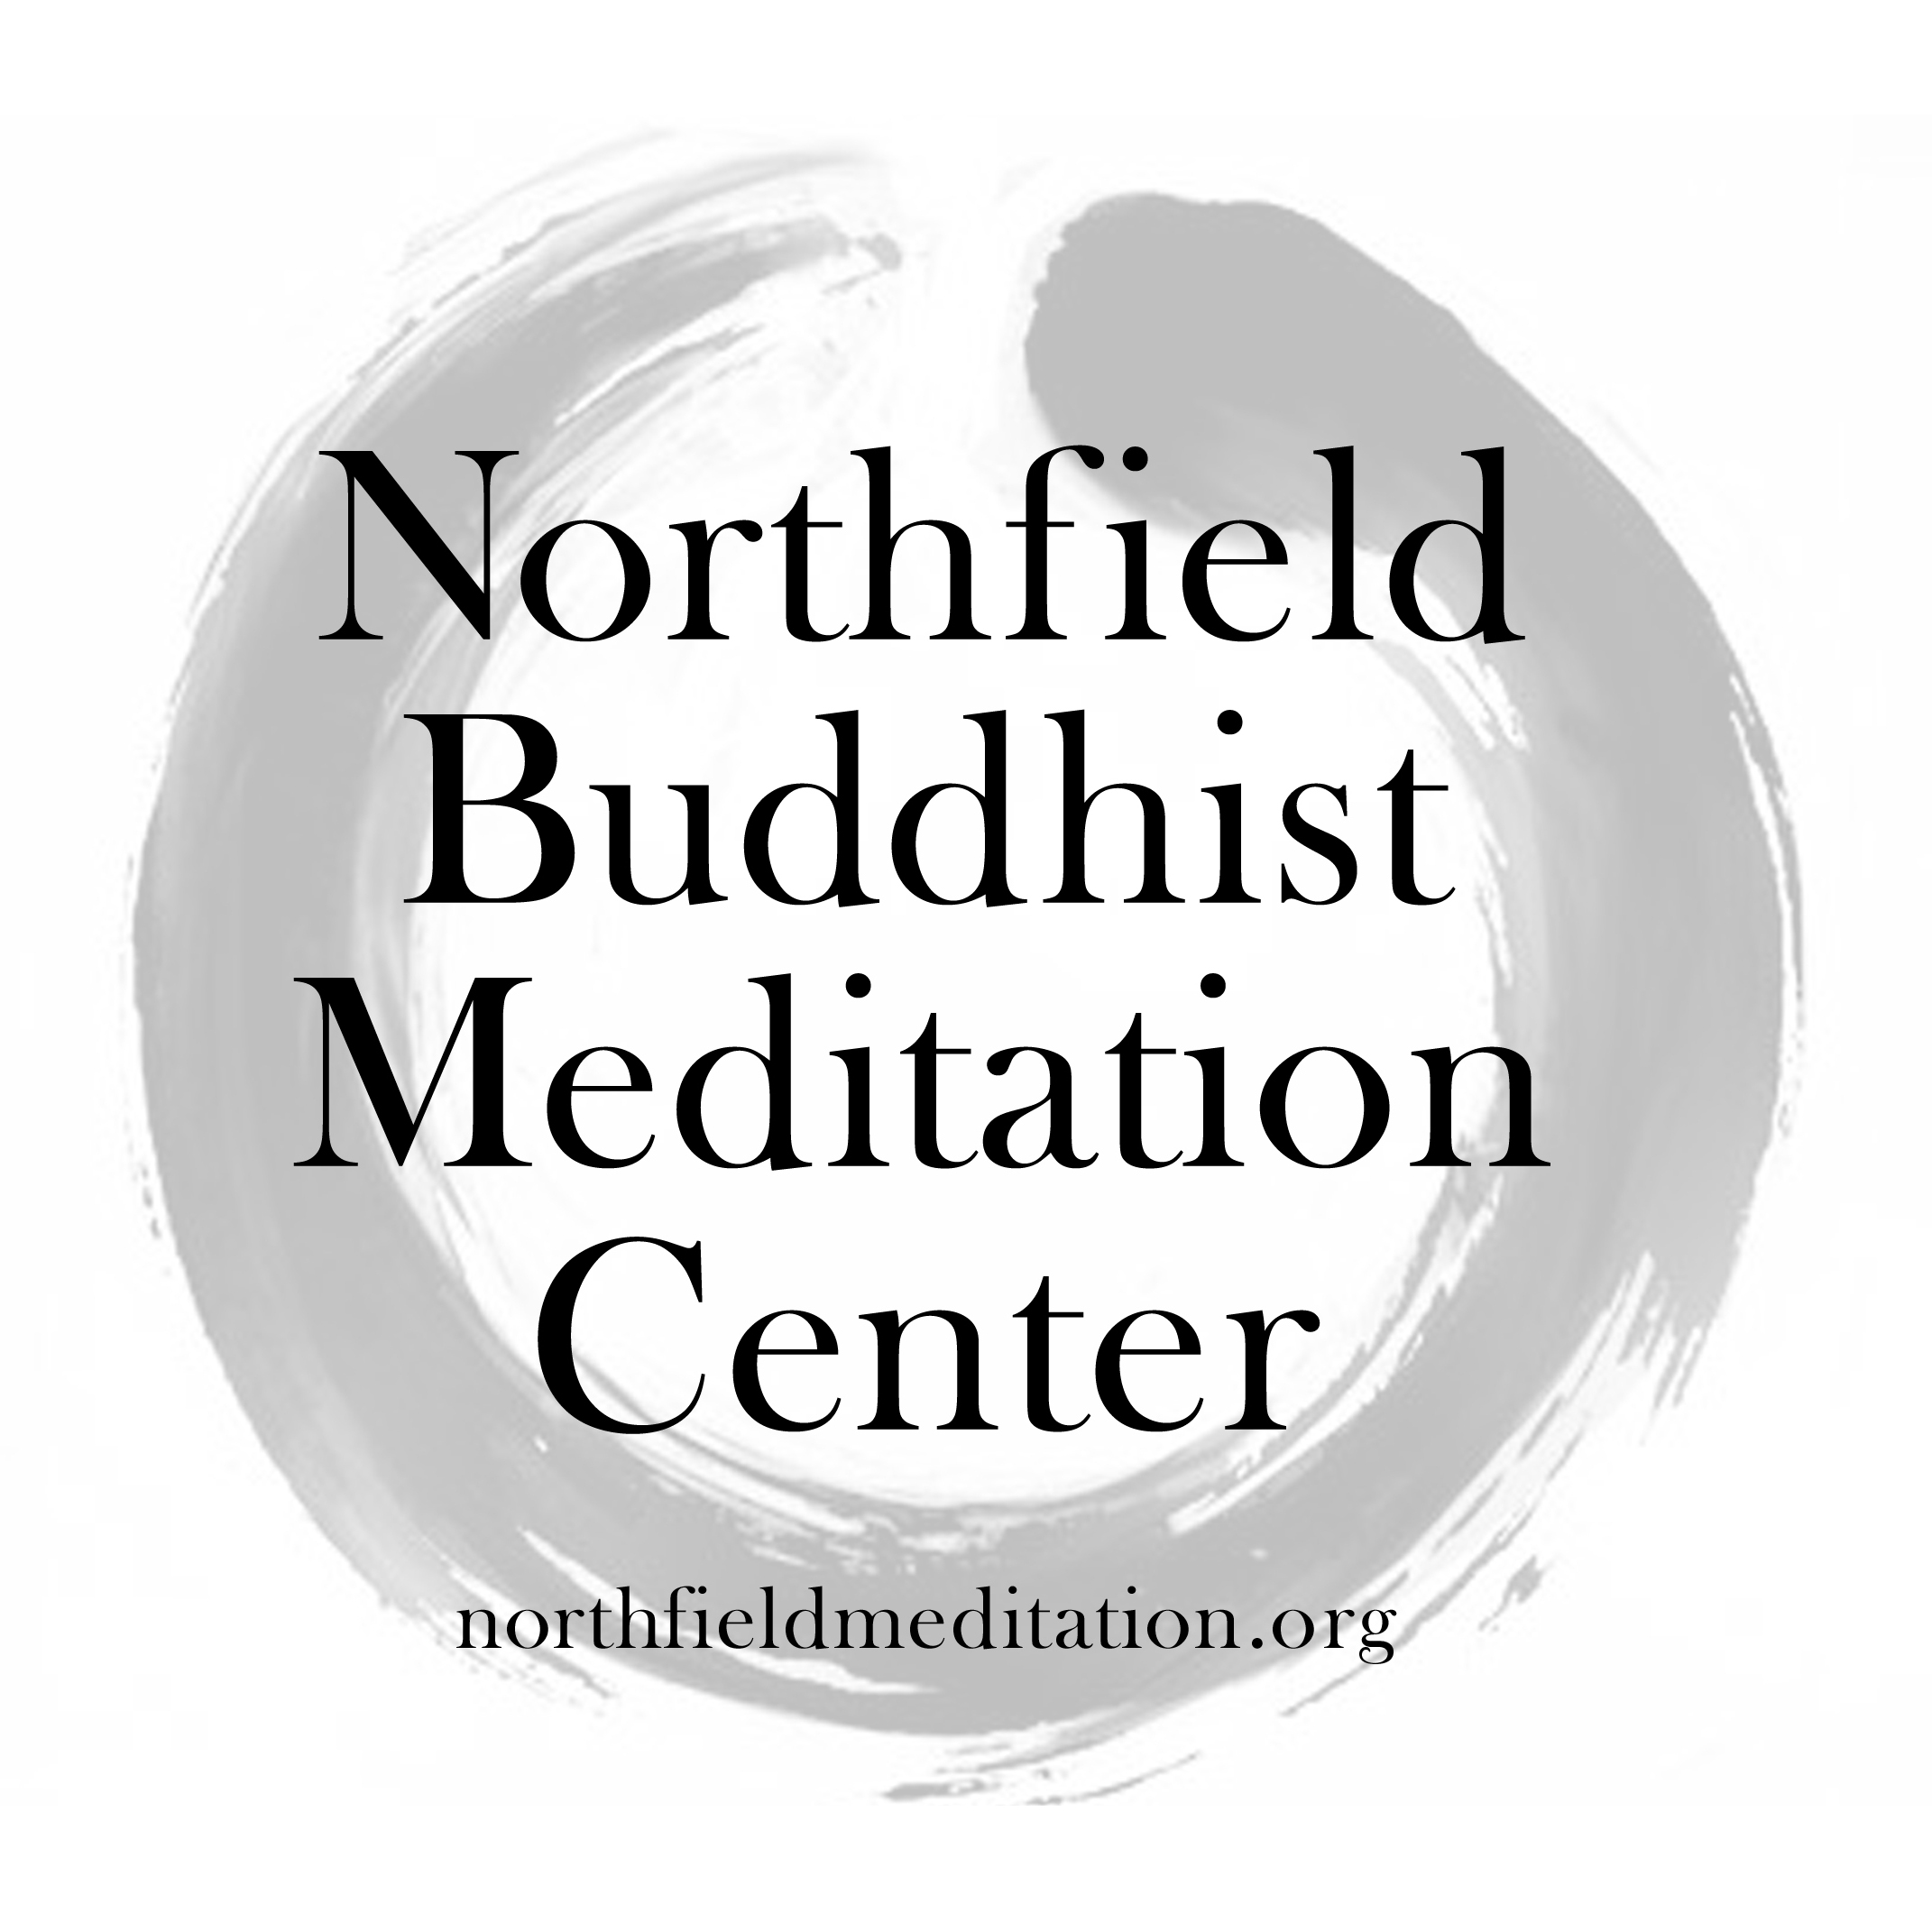 Northfield Buddhist Meditation Center logo